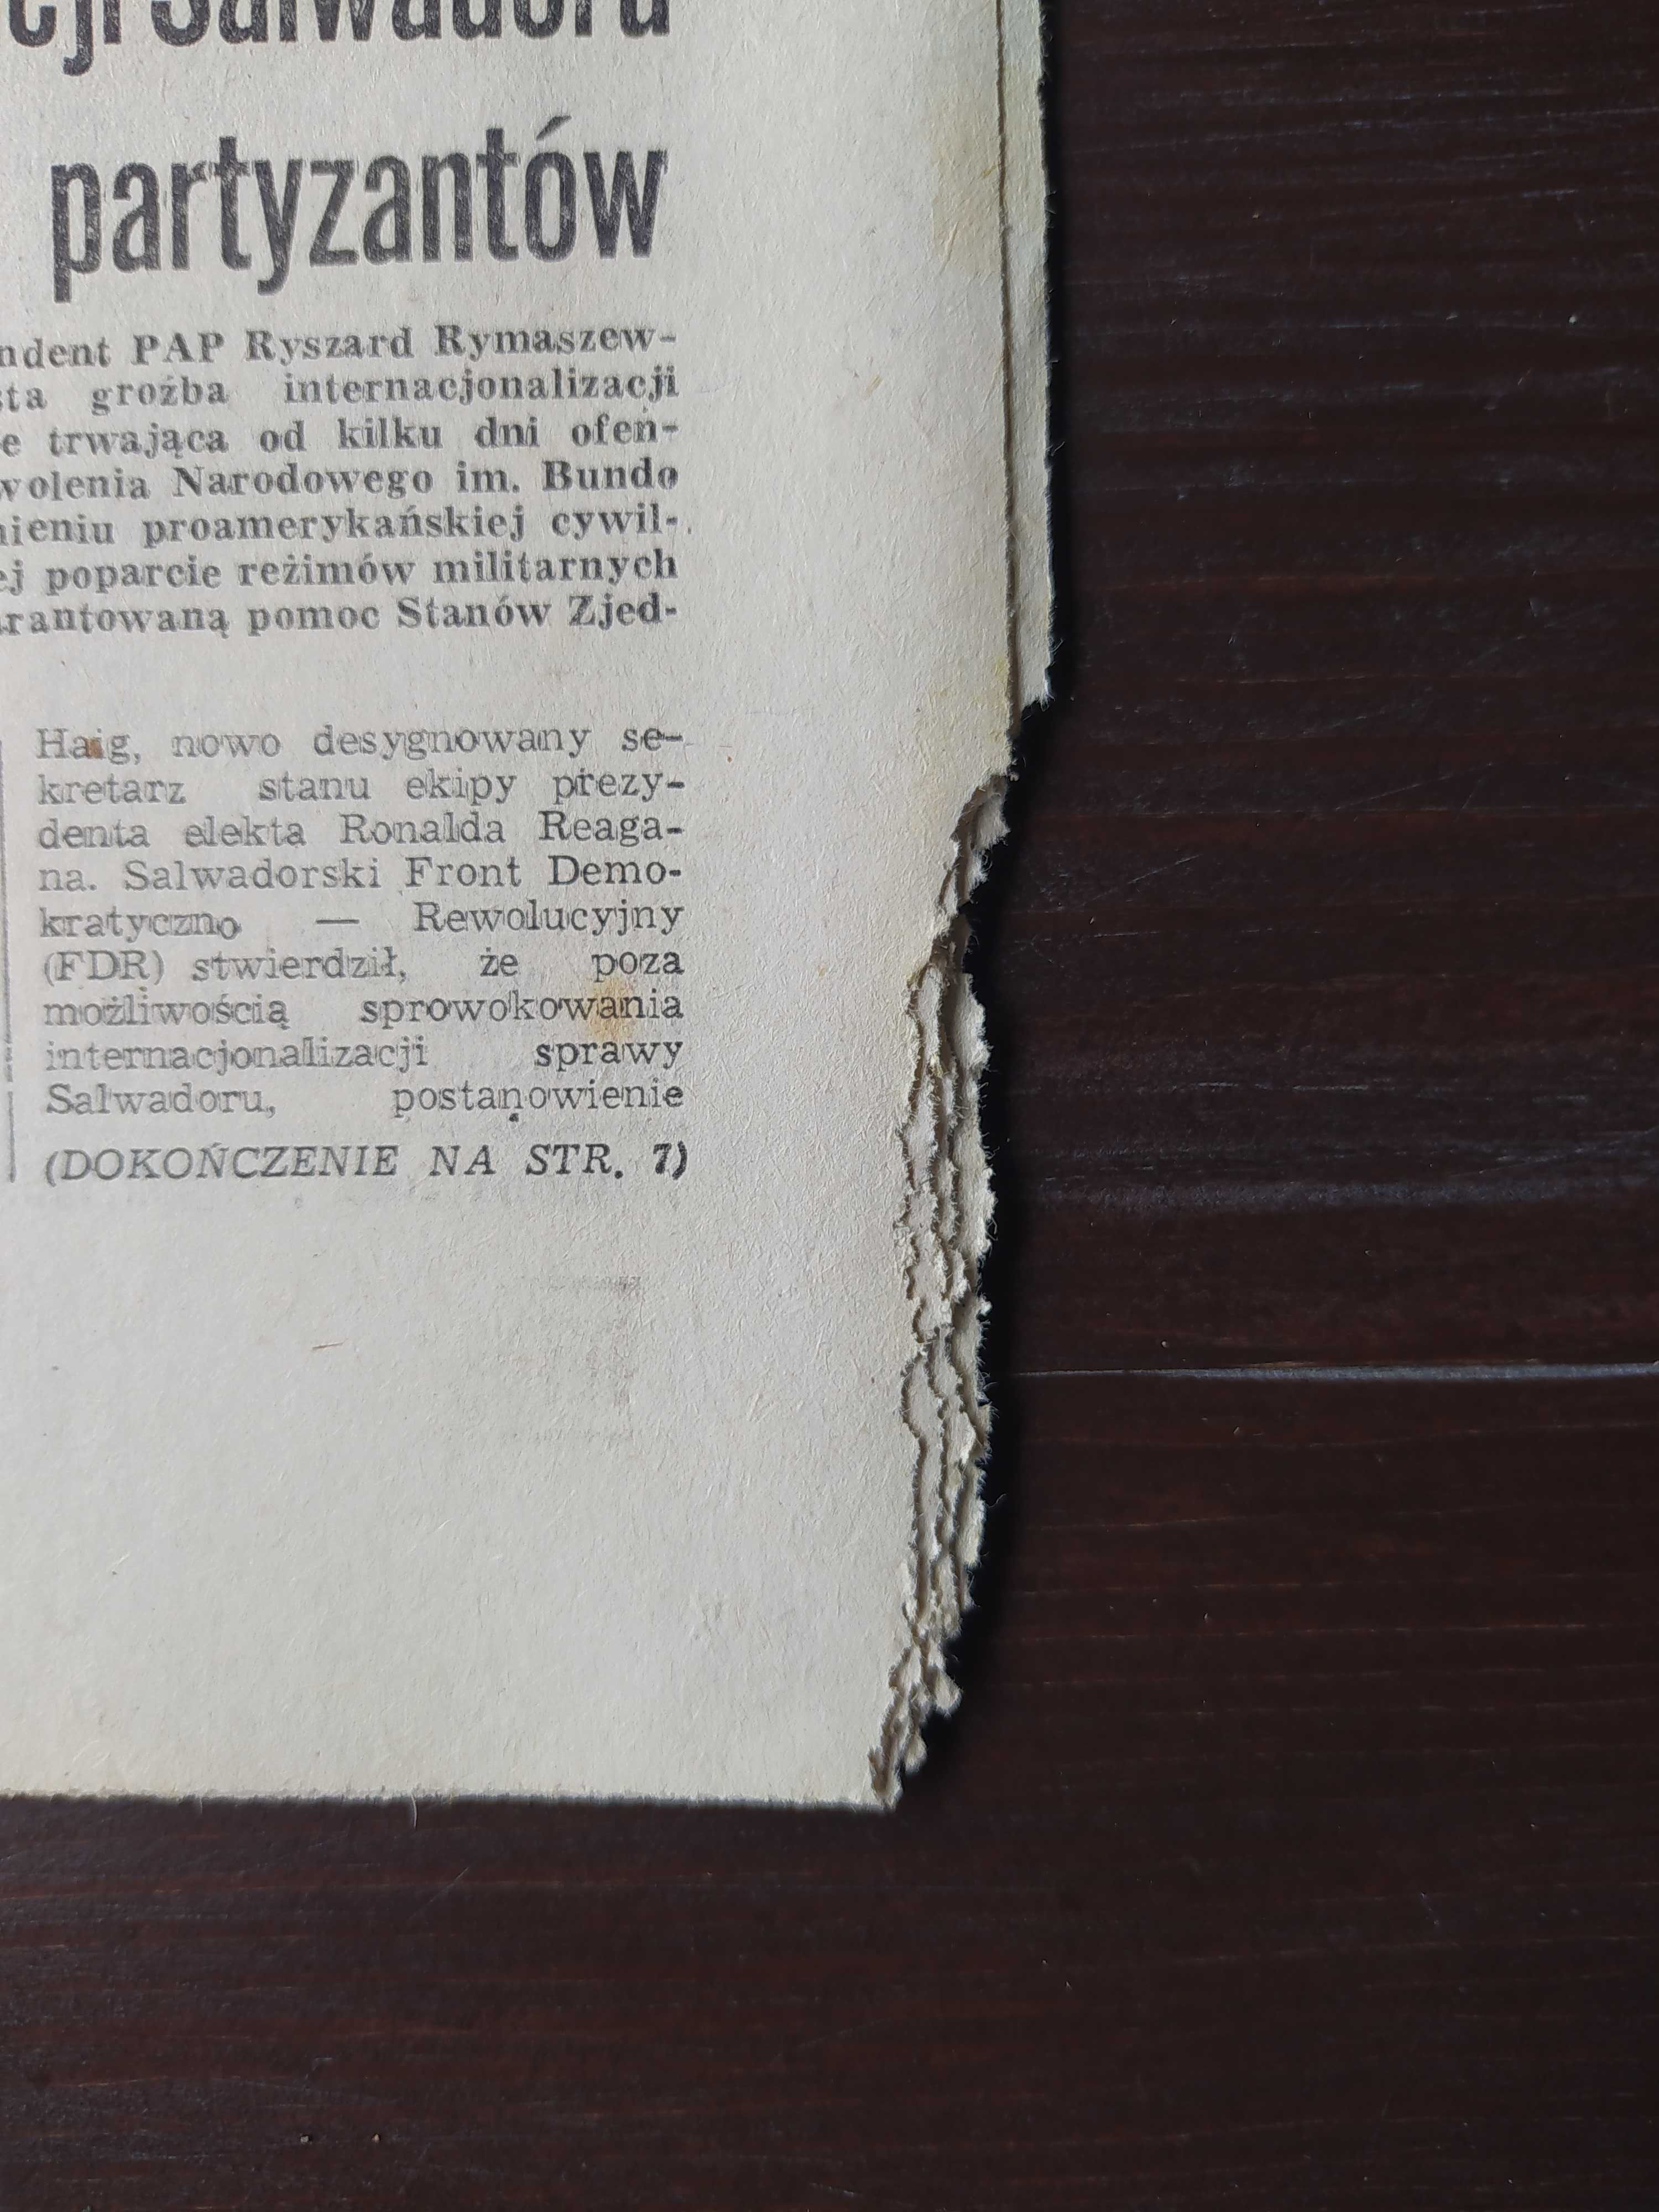 Gazeta TRYBUNA LUDU Nr 13 (11331), 16 I 1981r. PRL